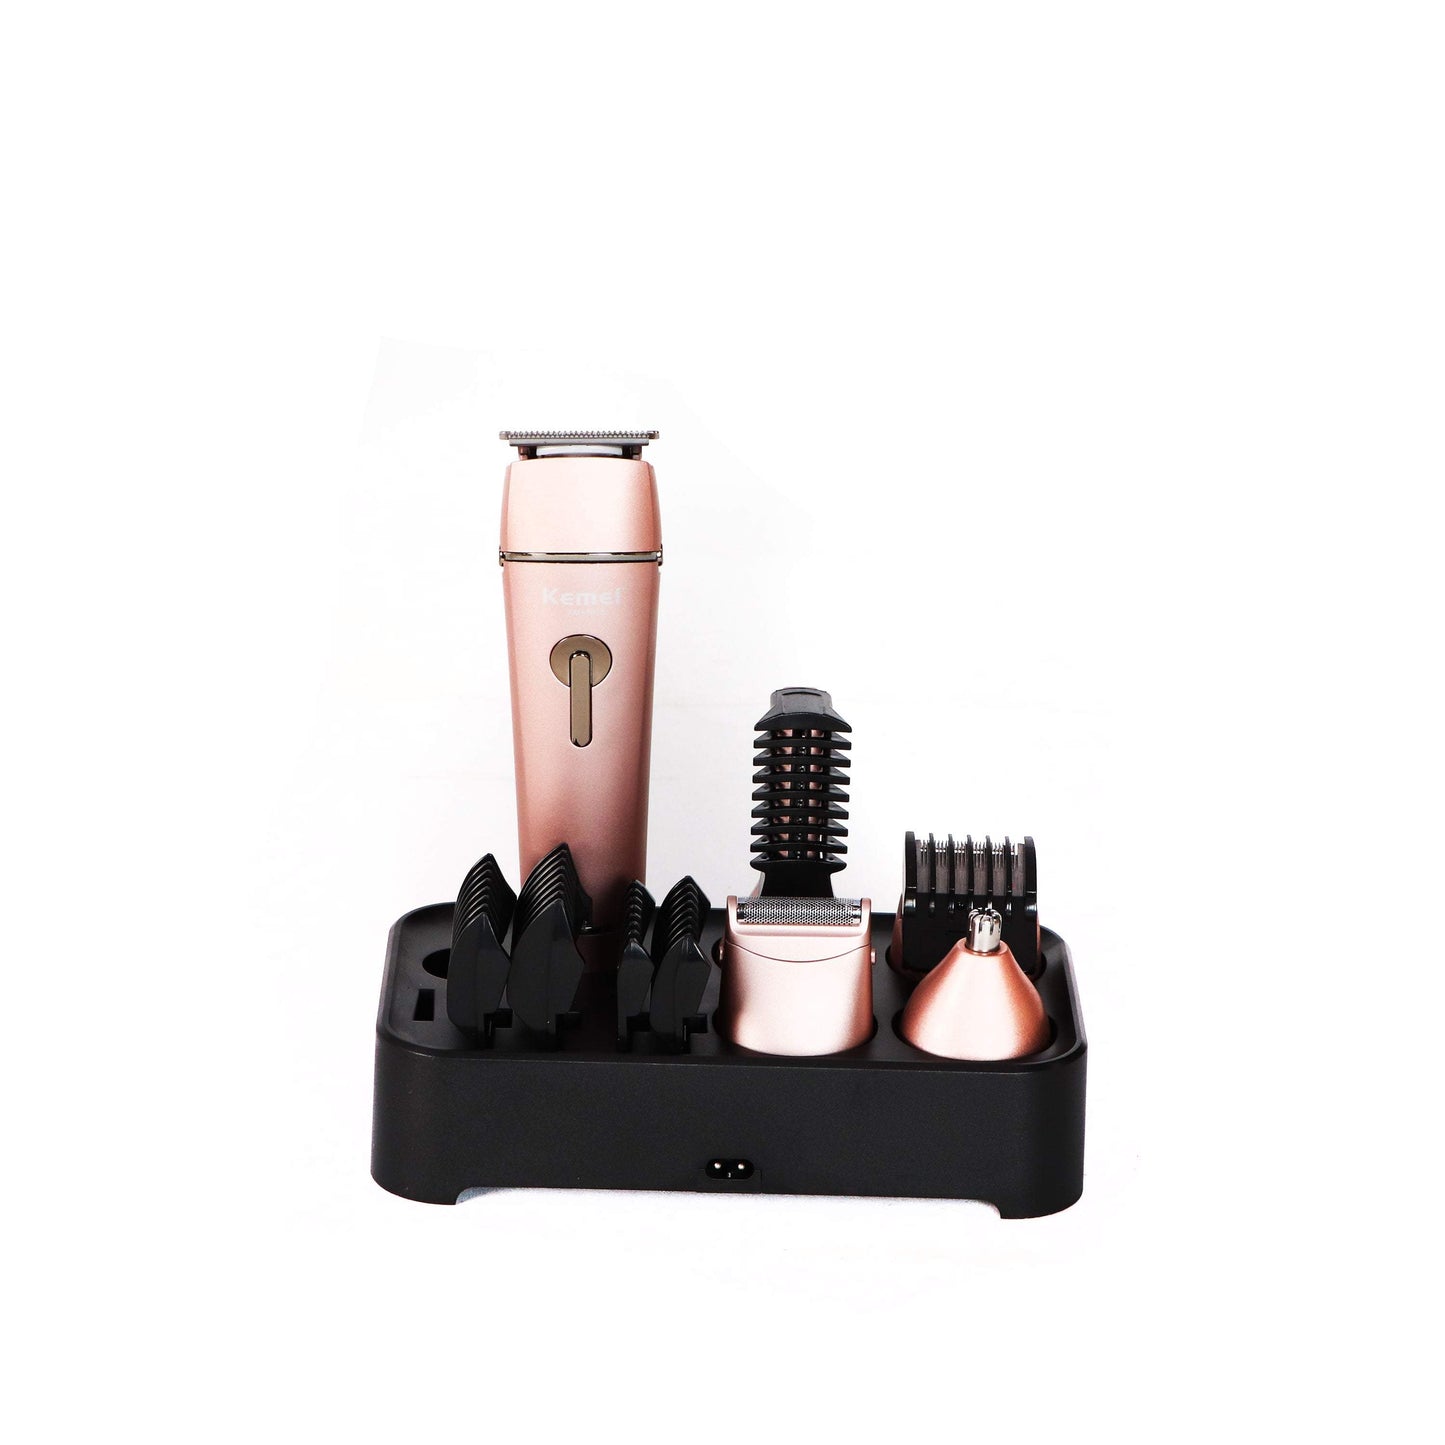 Kemei 10-in-1 Multifunction Hair Grooming Kit For Men KM-1015-Royal Brands Co-